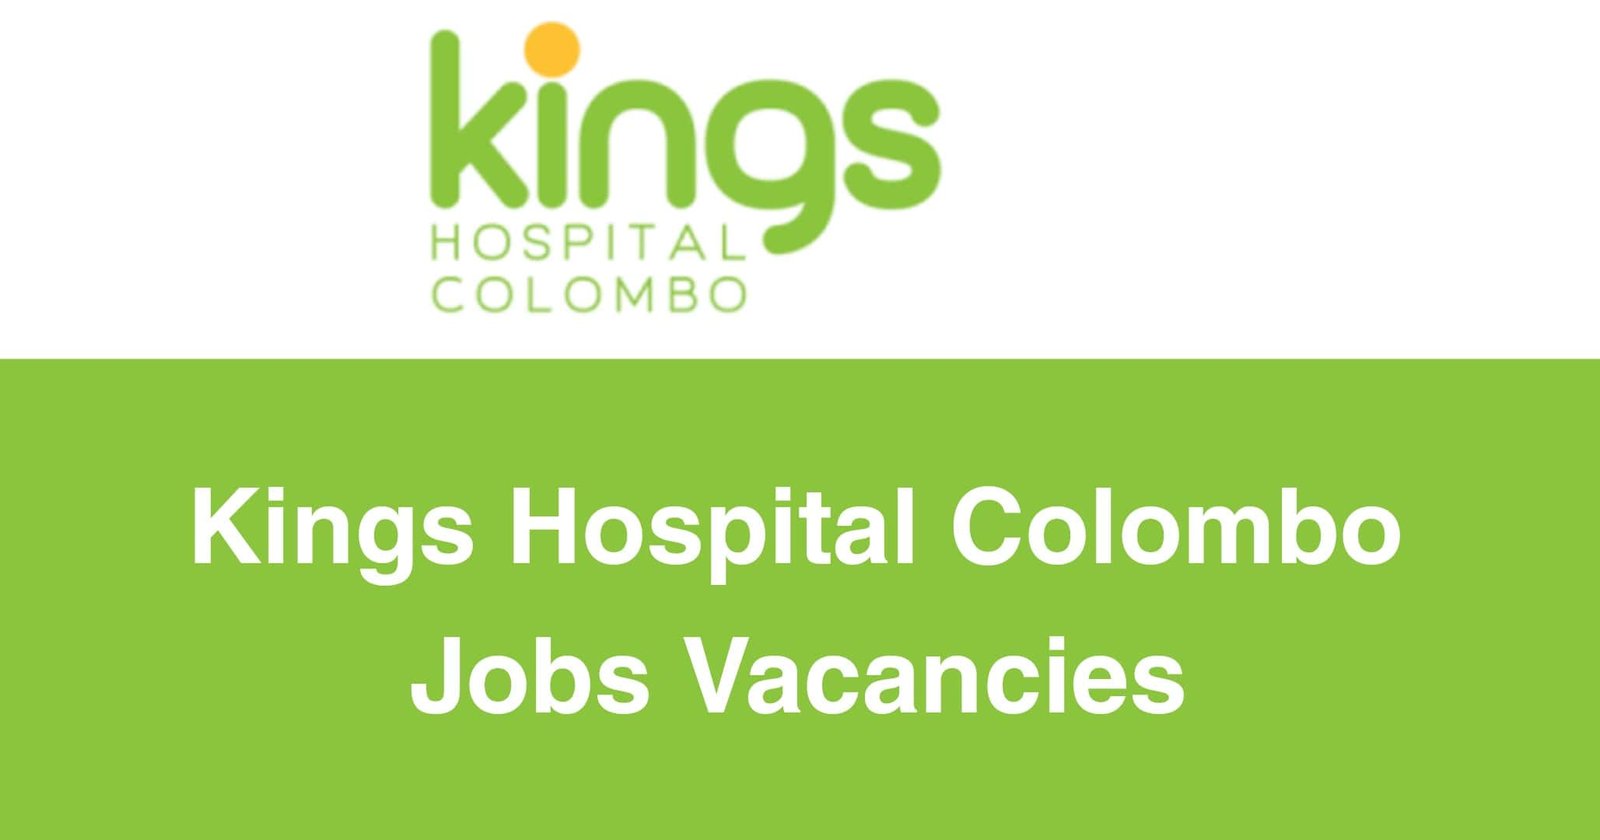 Kings Hospital Colombo Jobs Vacancies